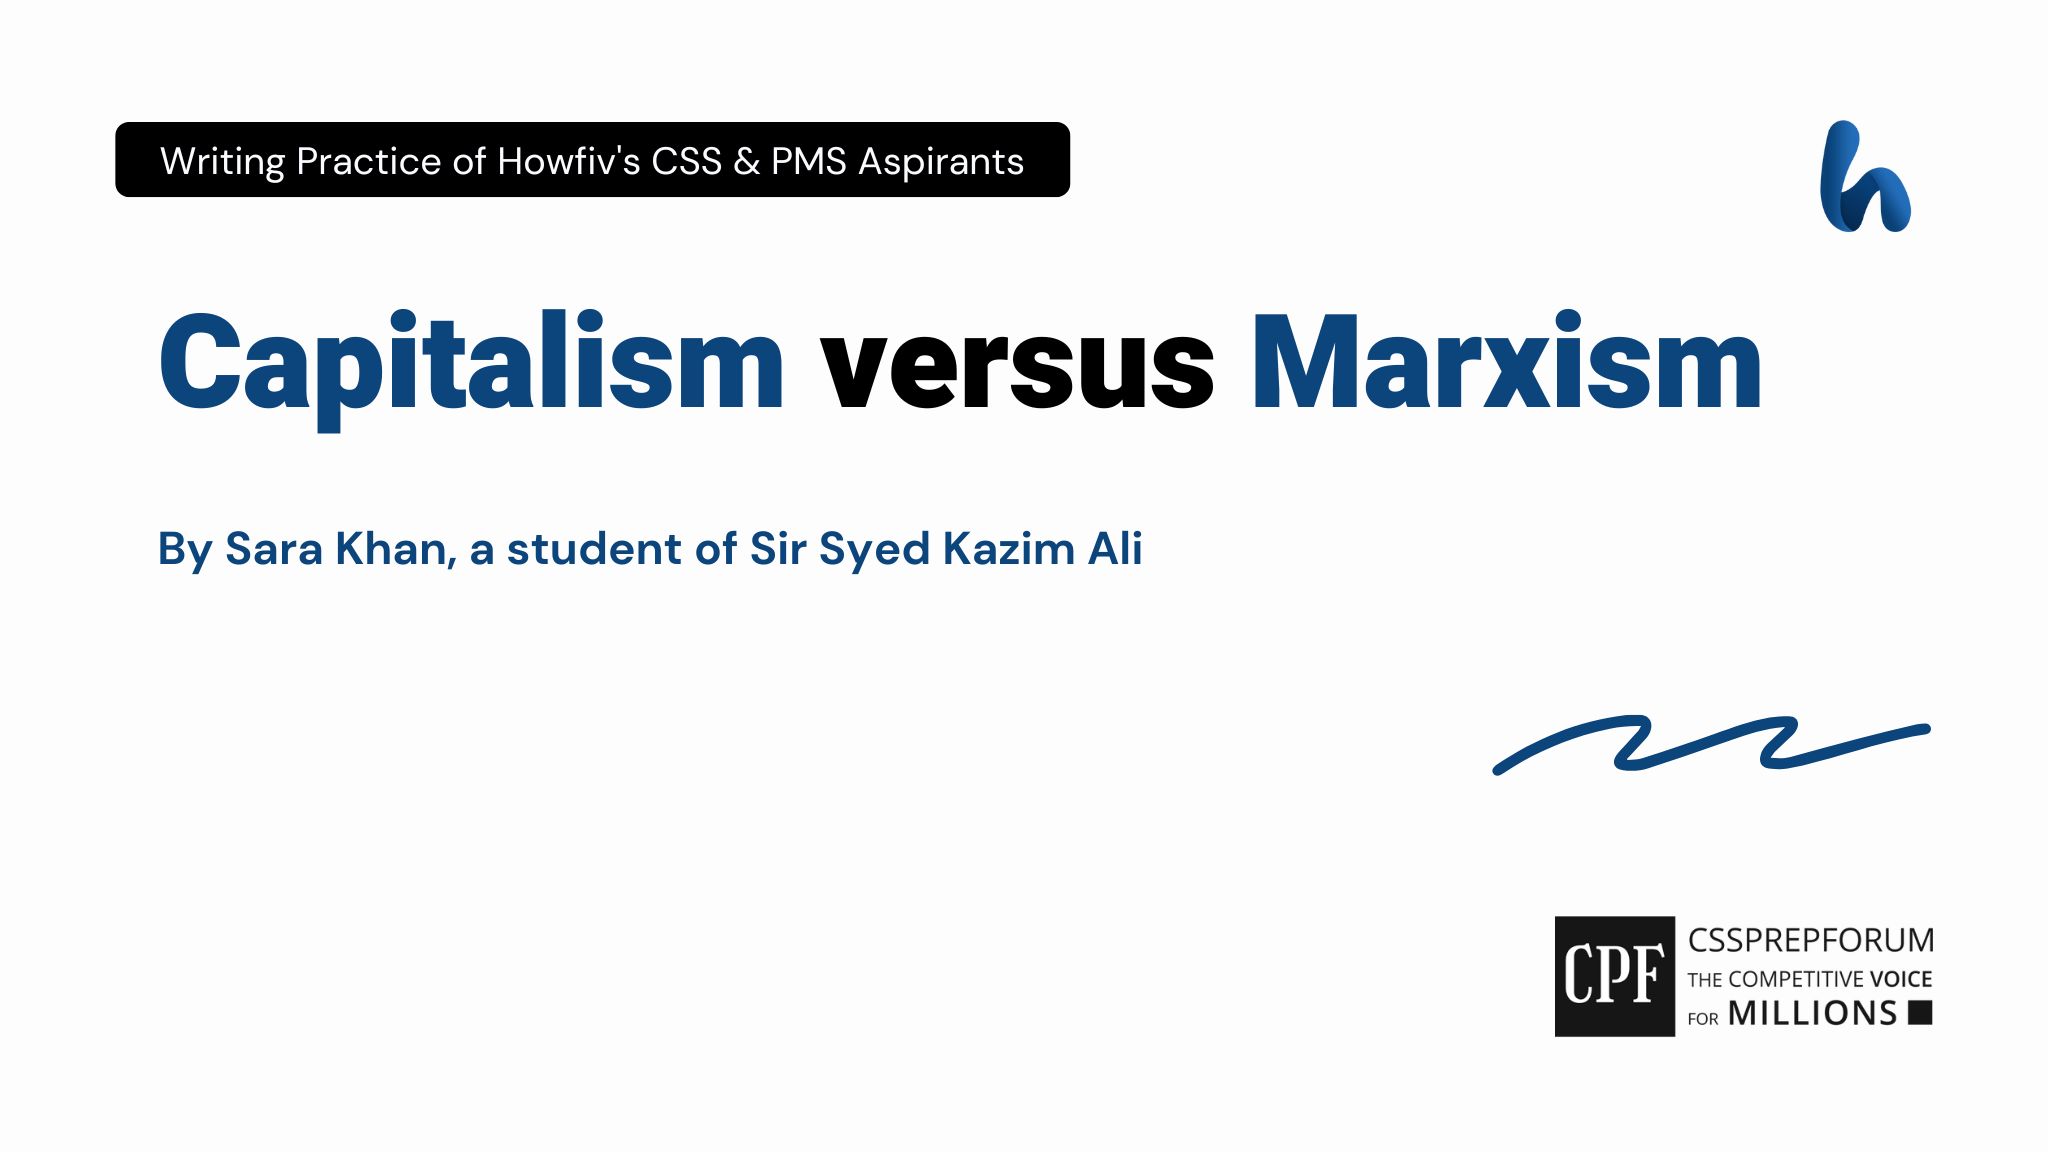 Capitalism versus Marxism by Sara Khan